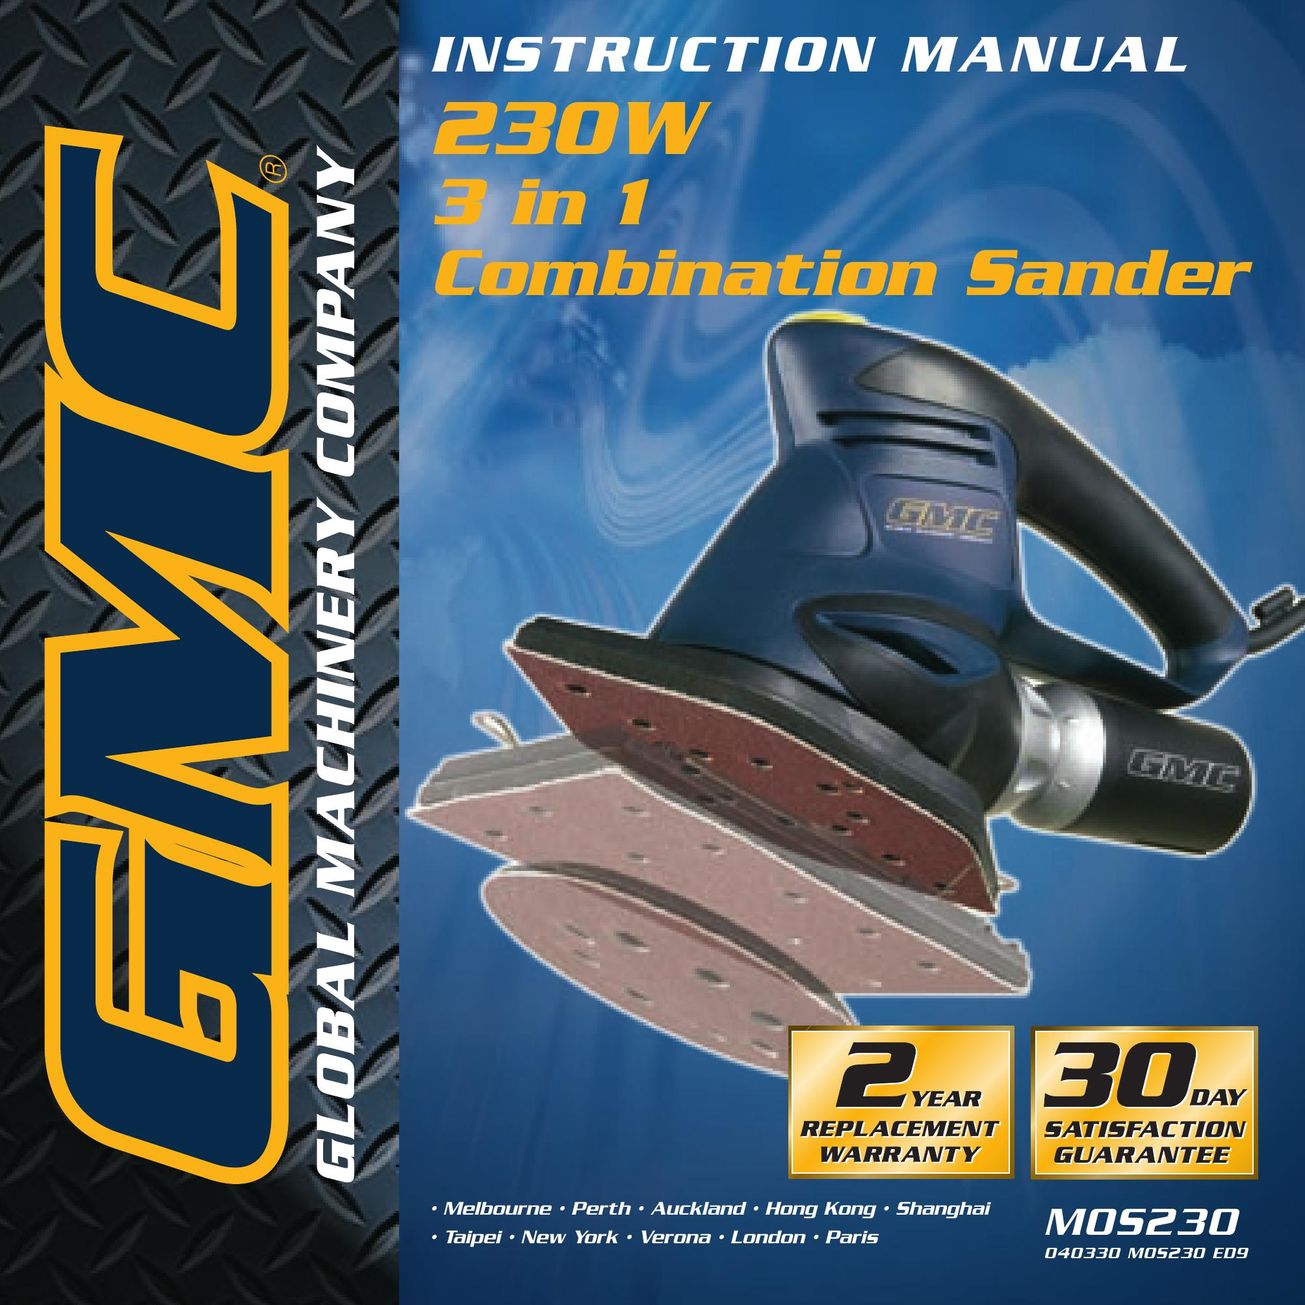 Global Machinery Company 230W Sander User Manual